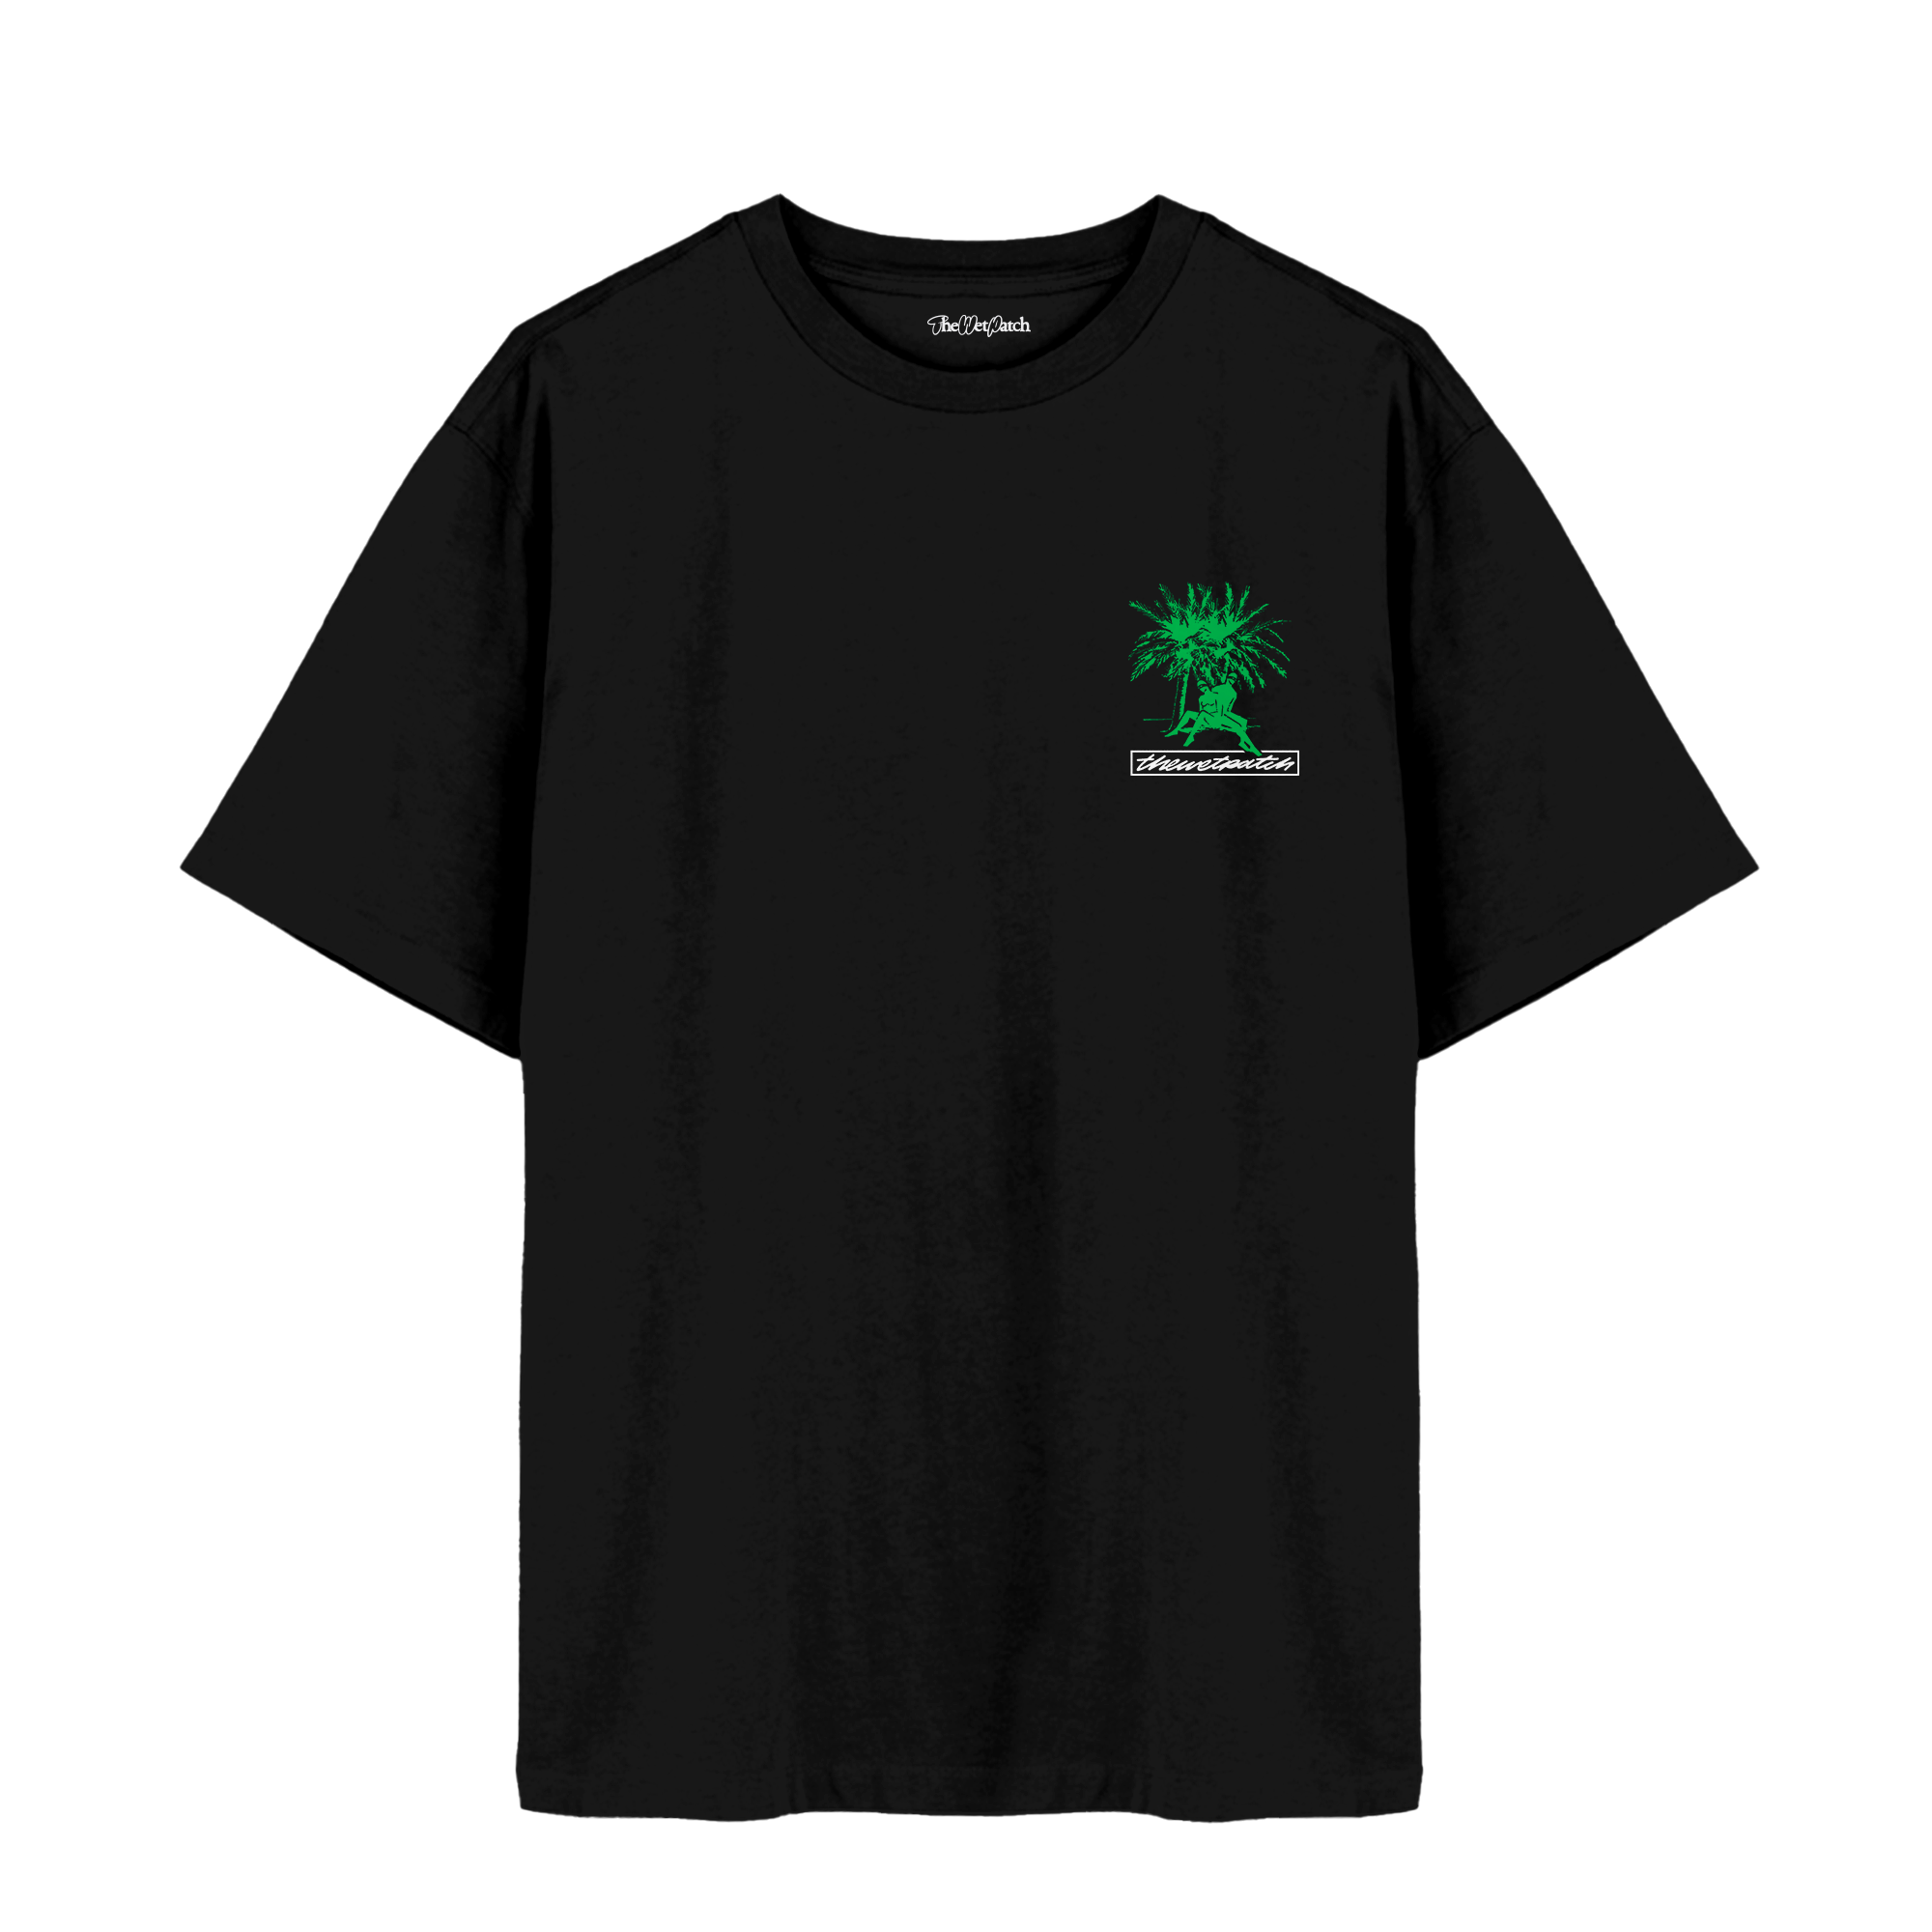 TWP026-Black - Palmtree T-shirt - The Wet Patch